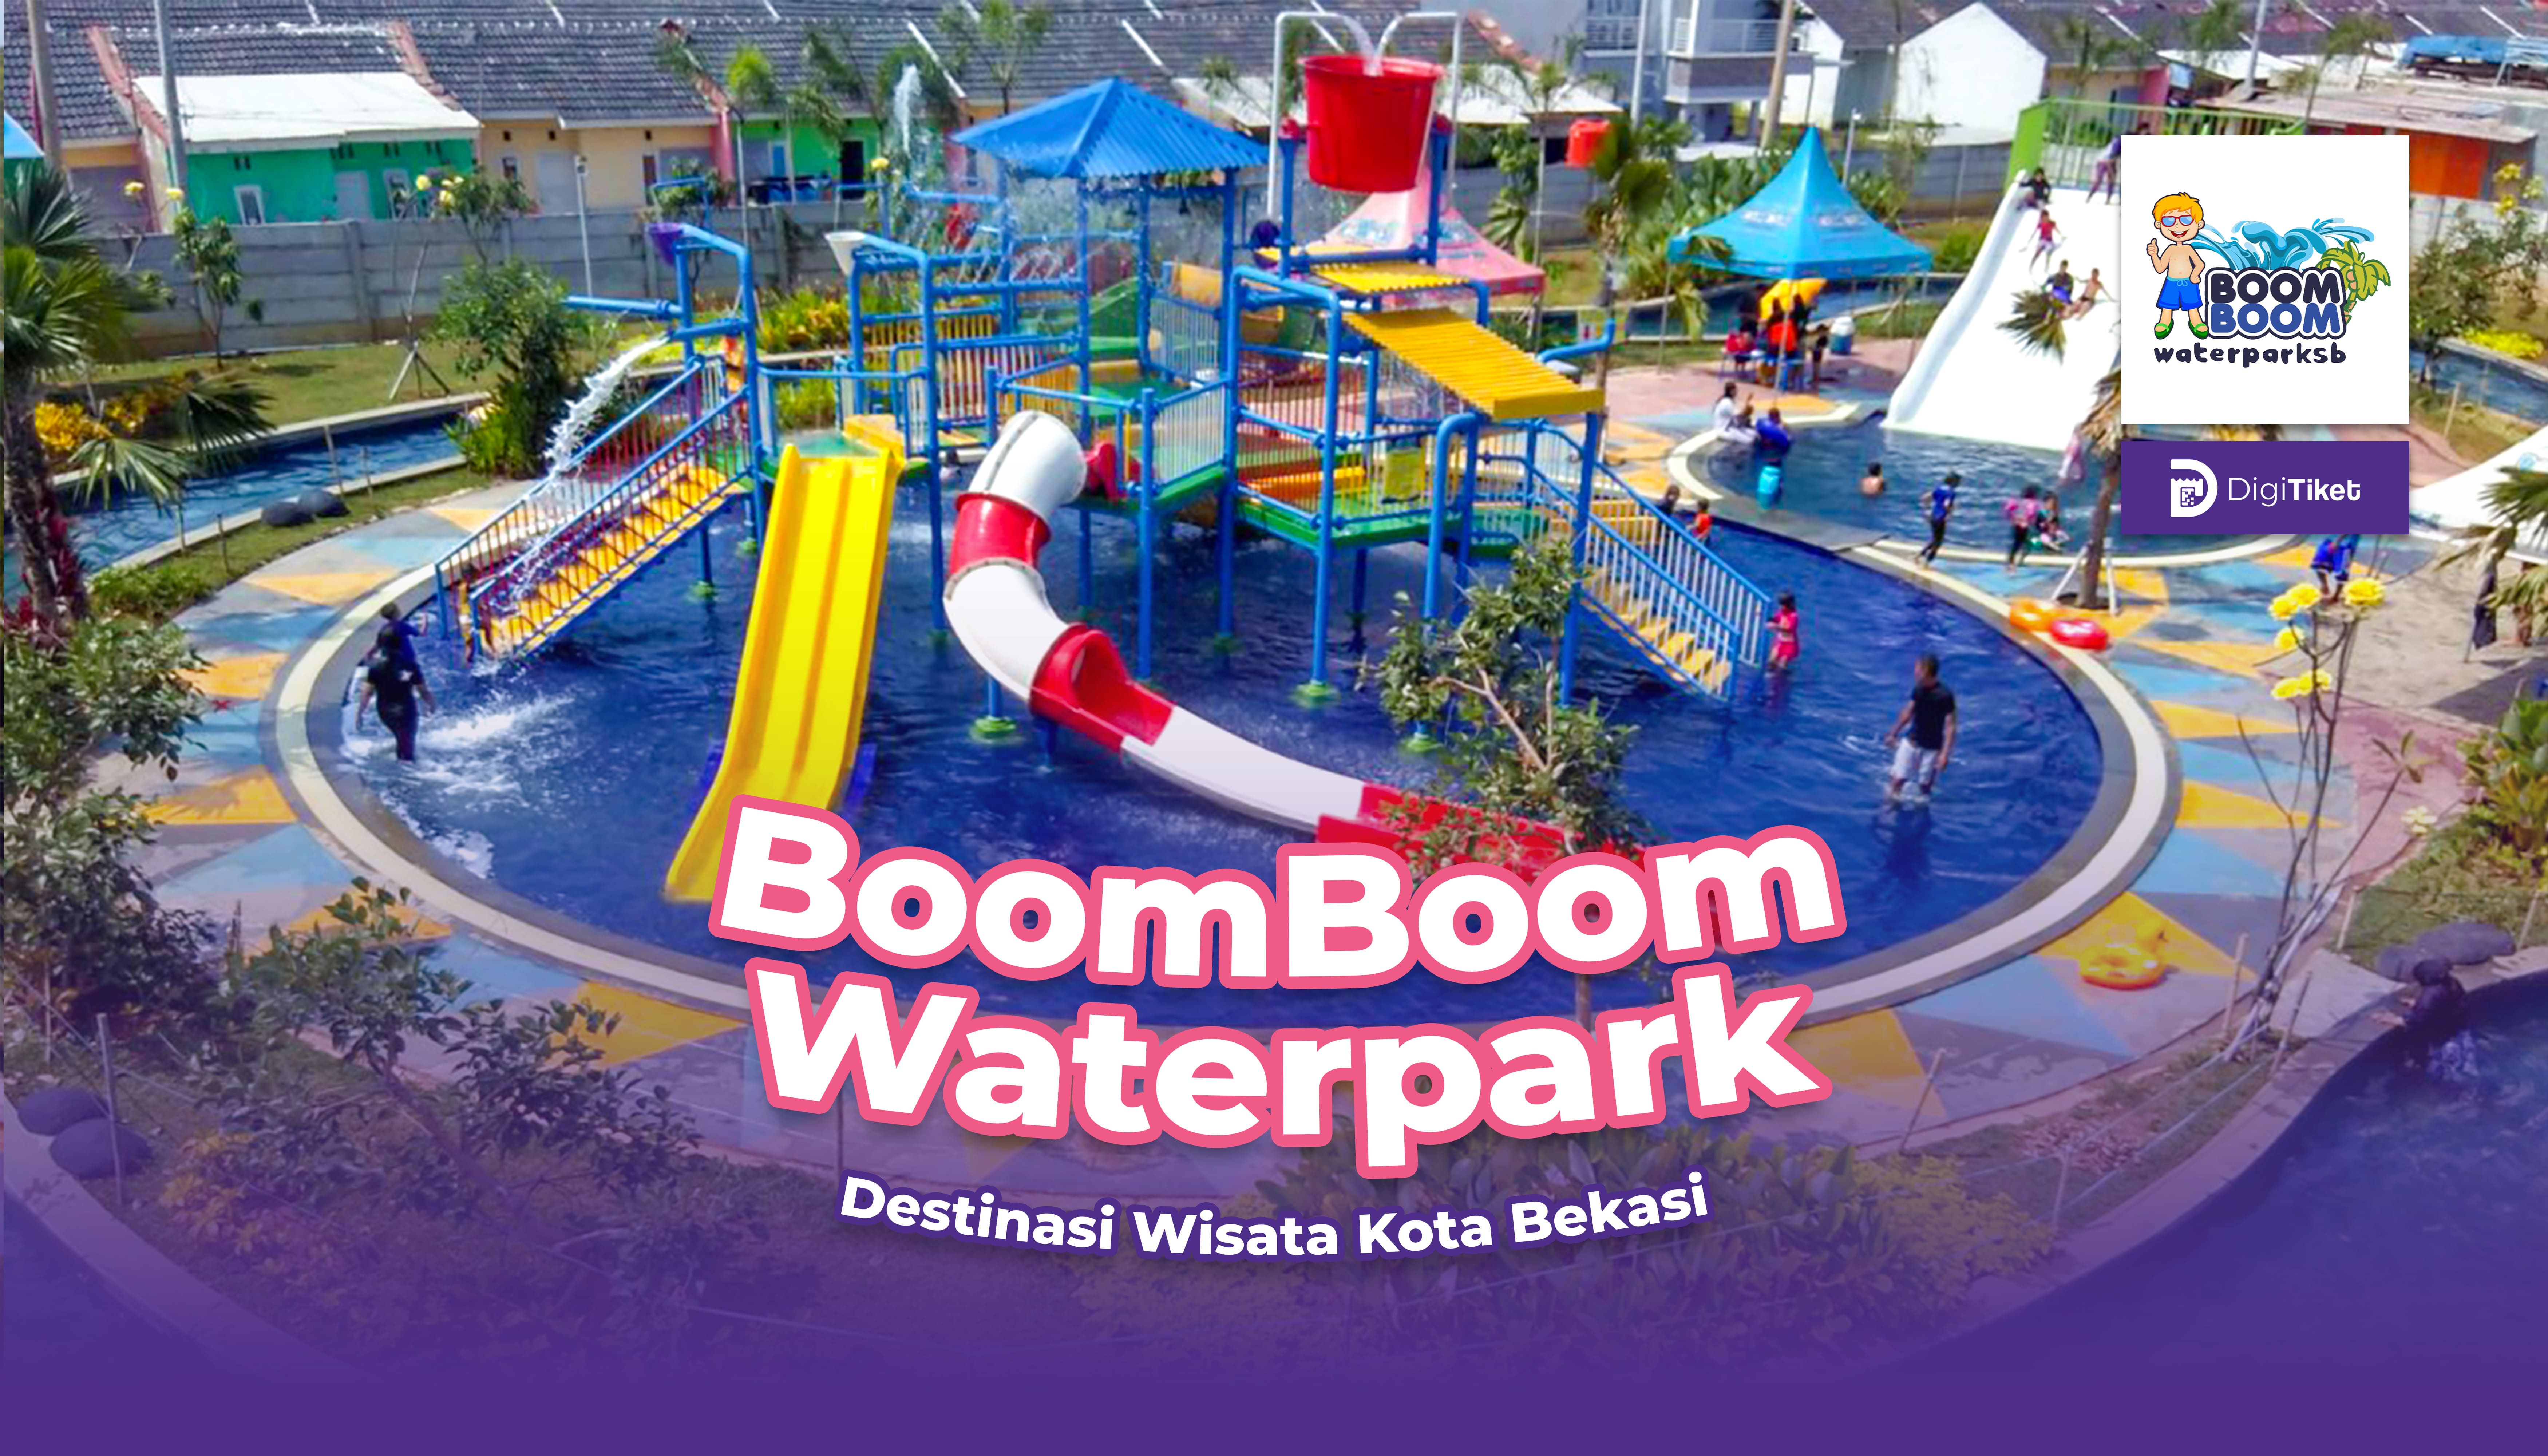 Boom Boom Waterpark ksb